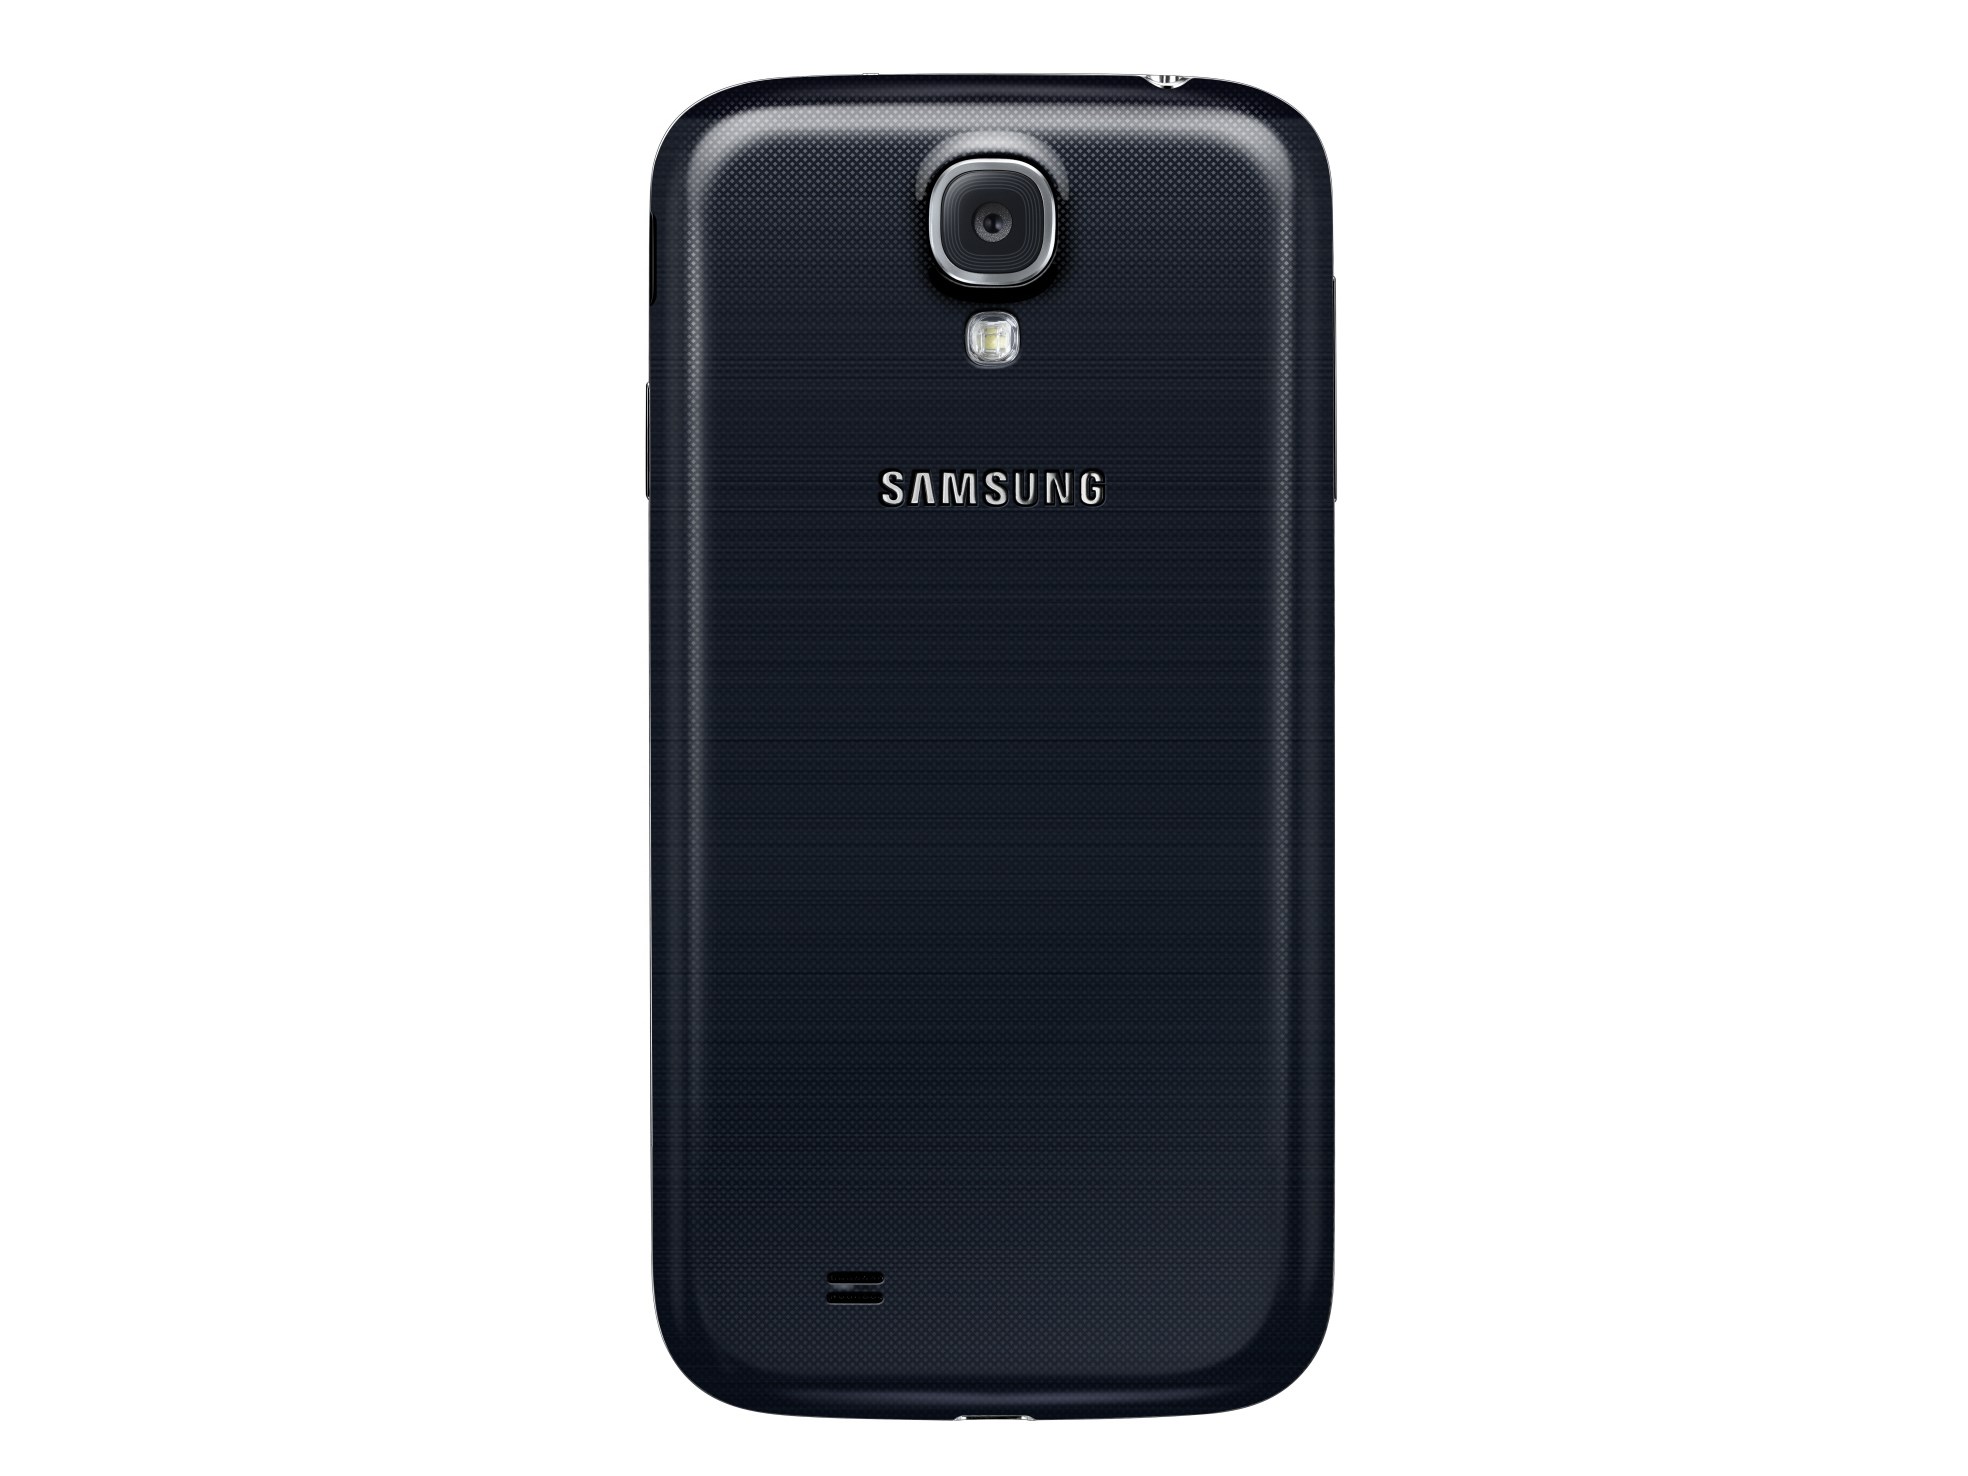 Samsung Galaxy S4 preț, specificații, data lansării dezvăluite